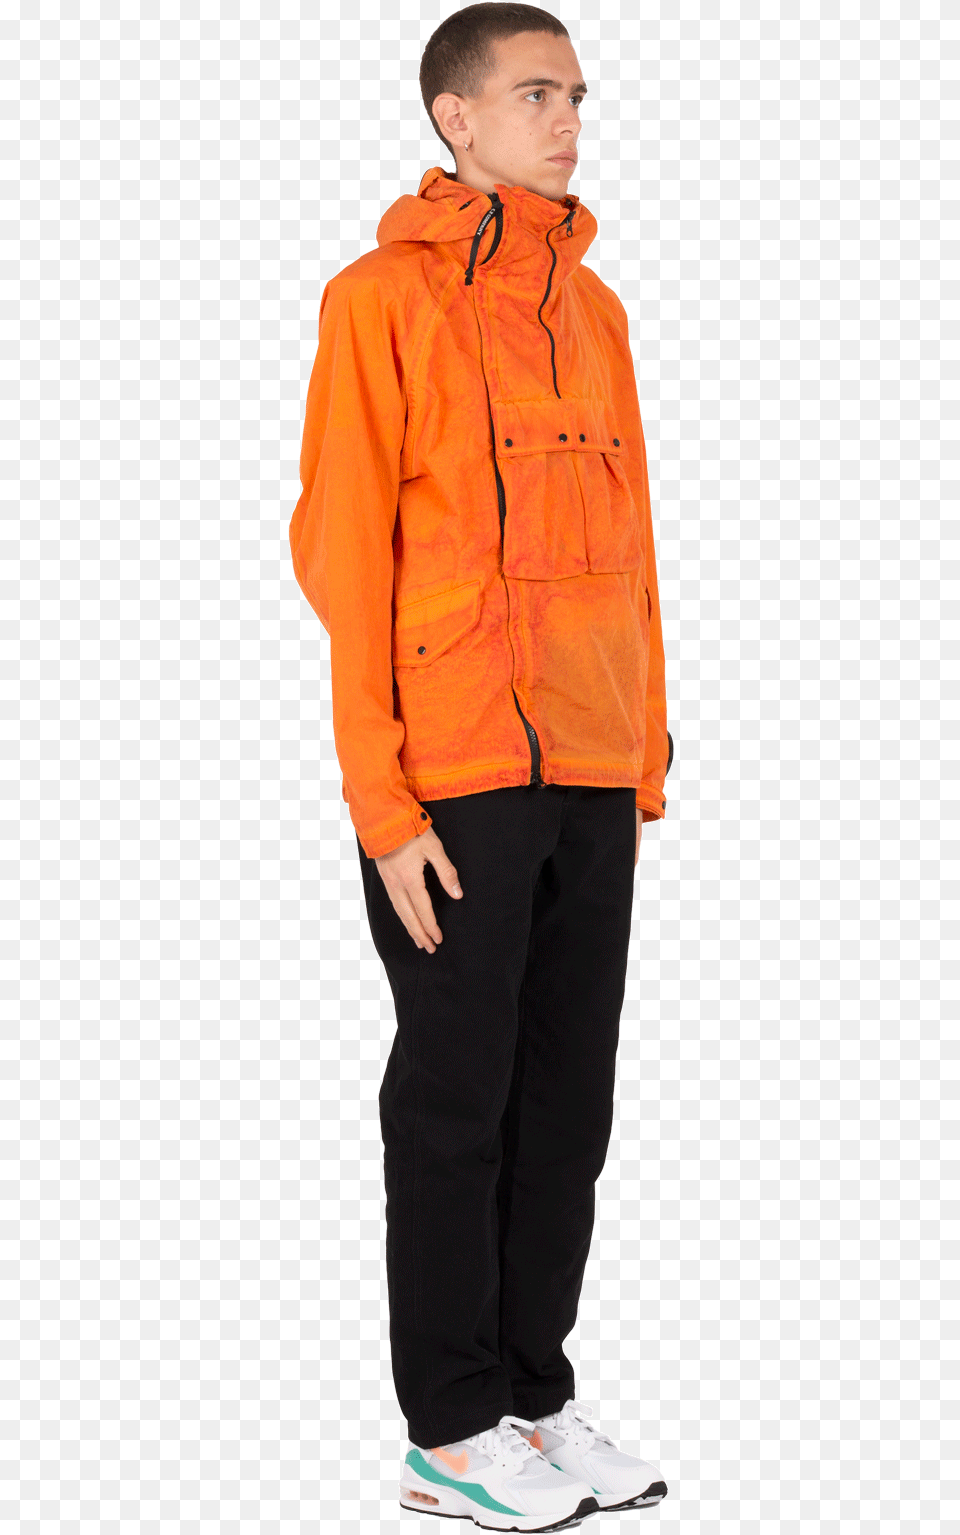 Standing, Vest, Clothing, Coat, Jacket Png Image